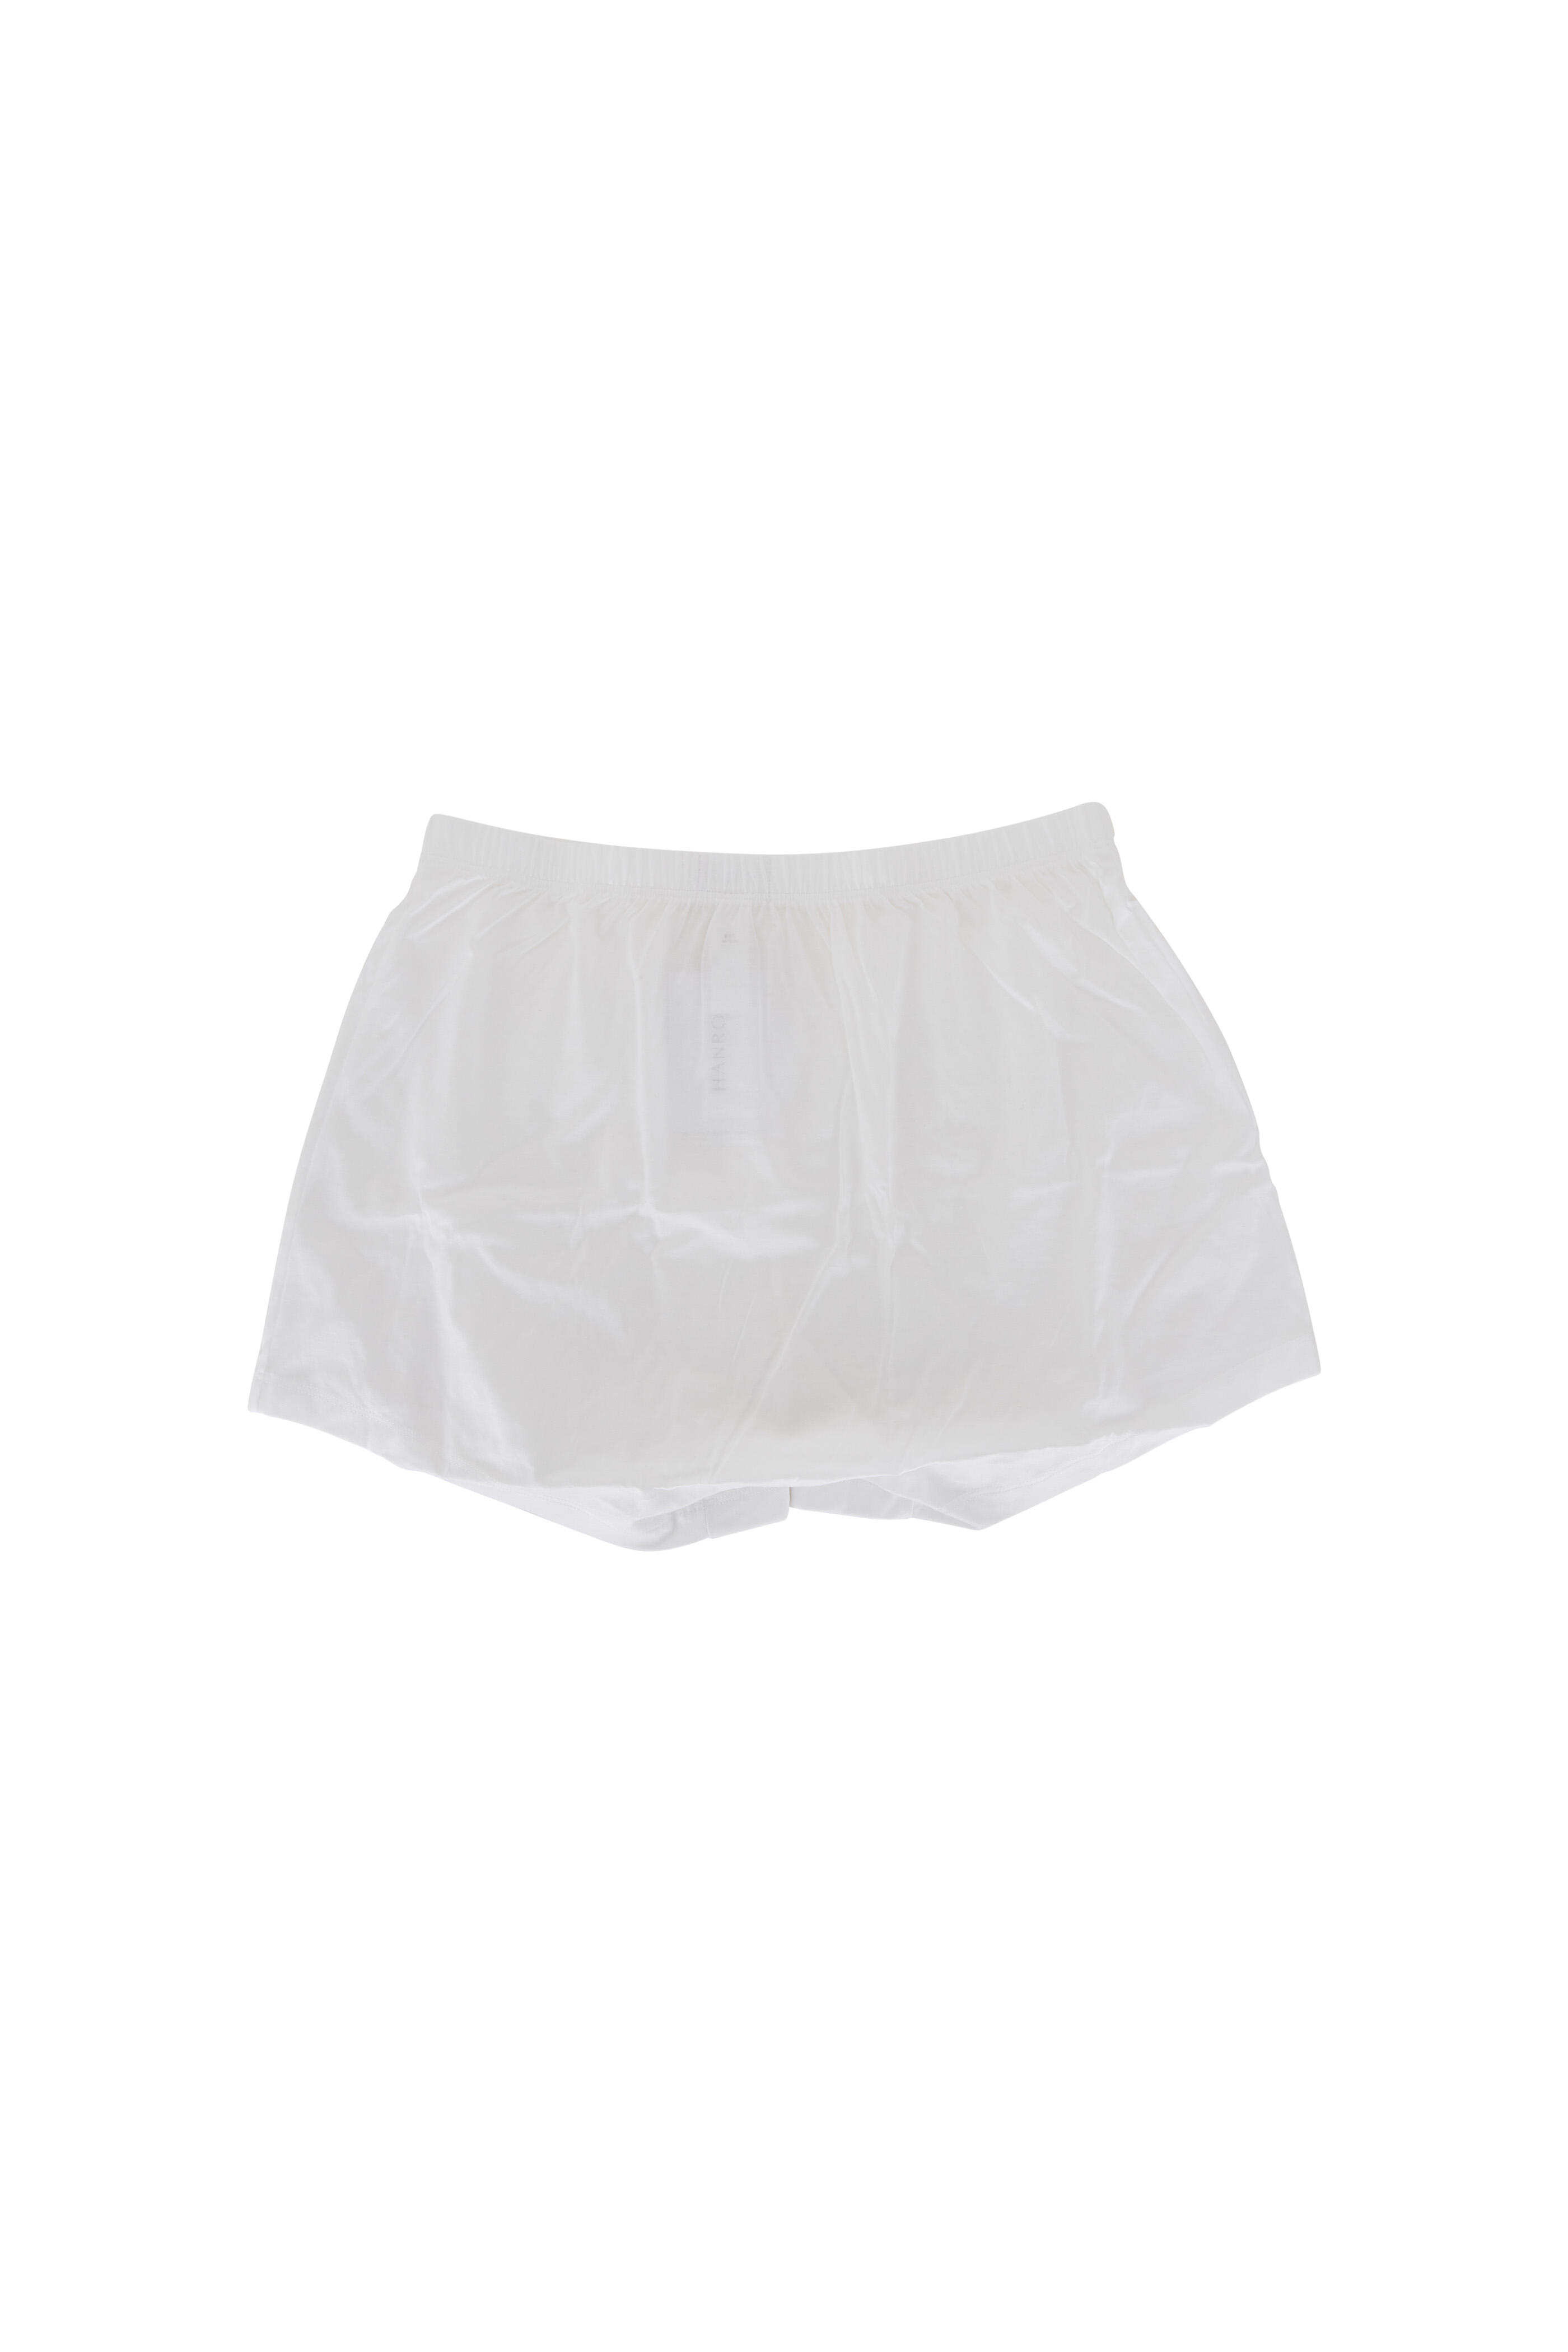 Hanro - White Cotton Boxer Short | Mitchell Stores